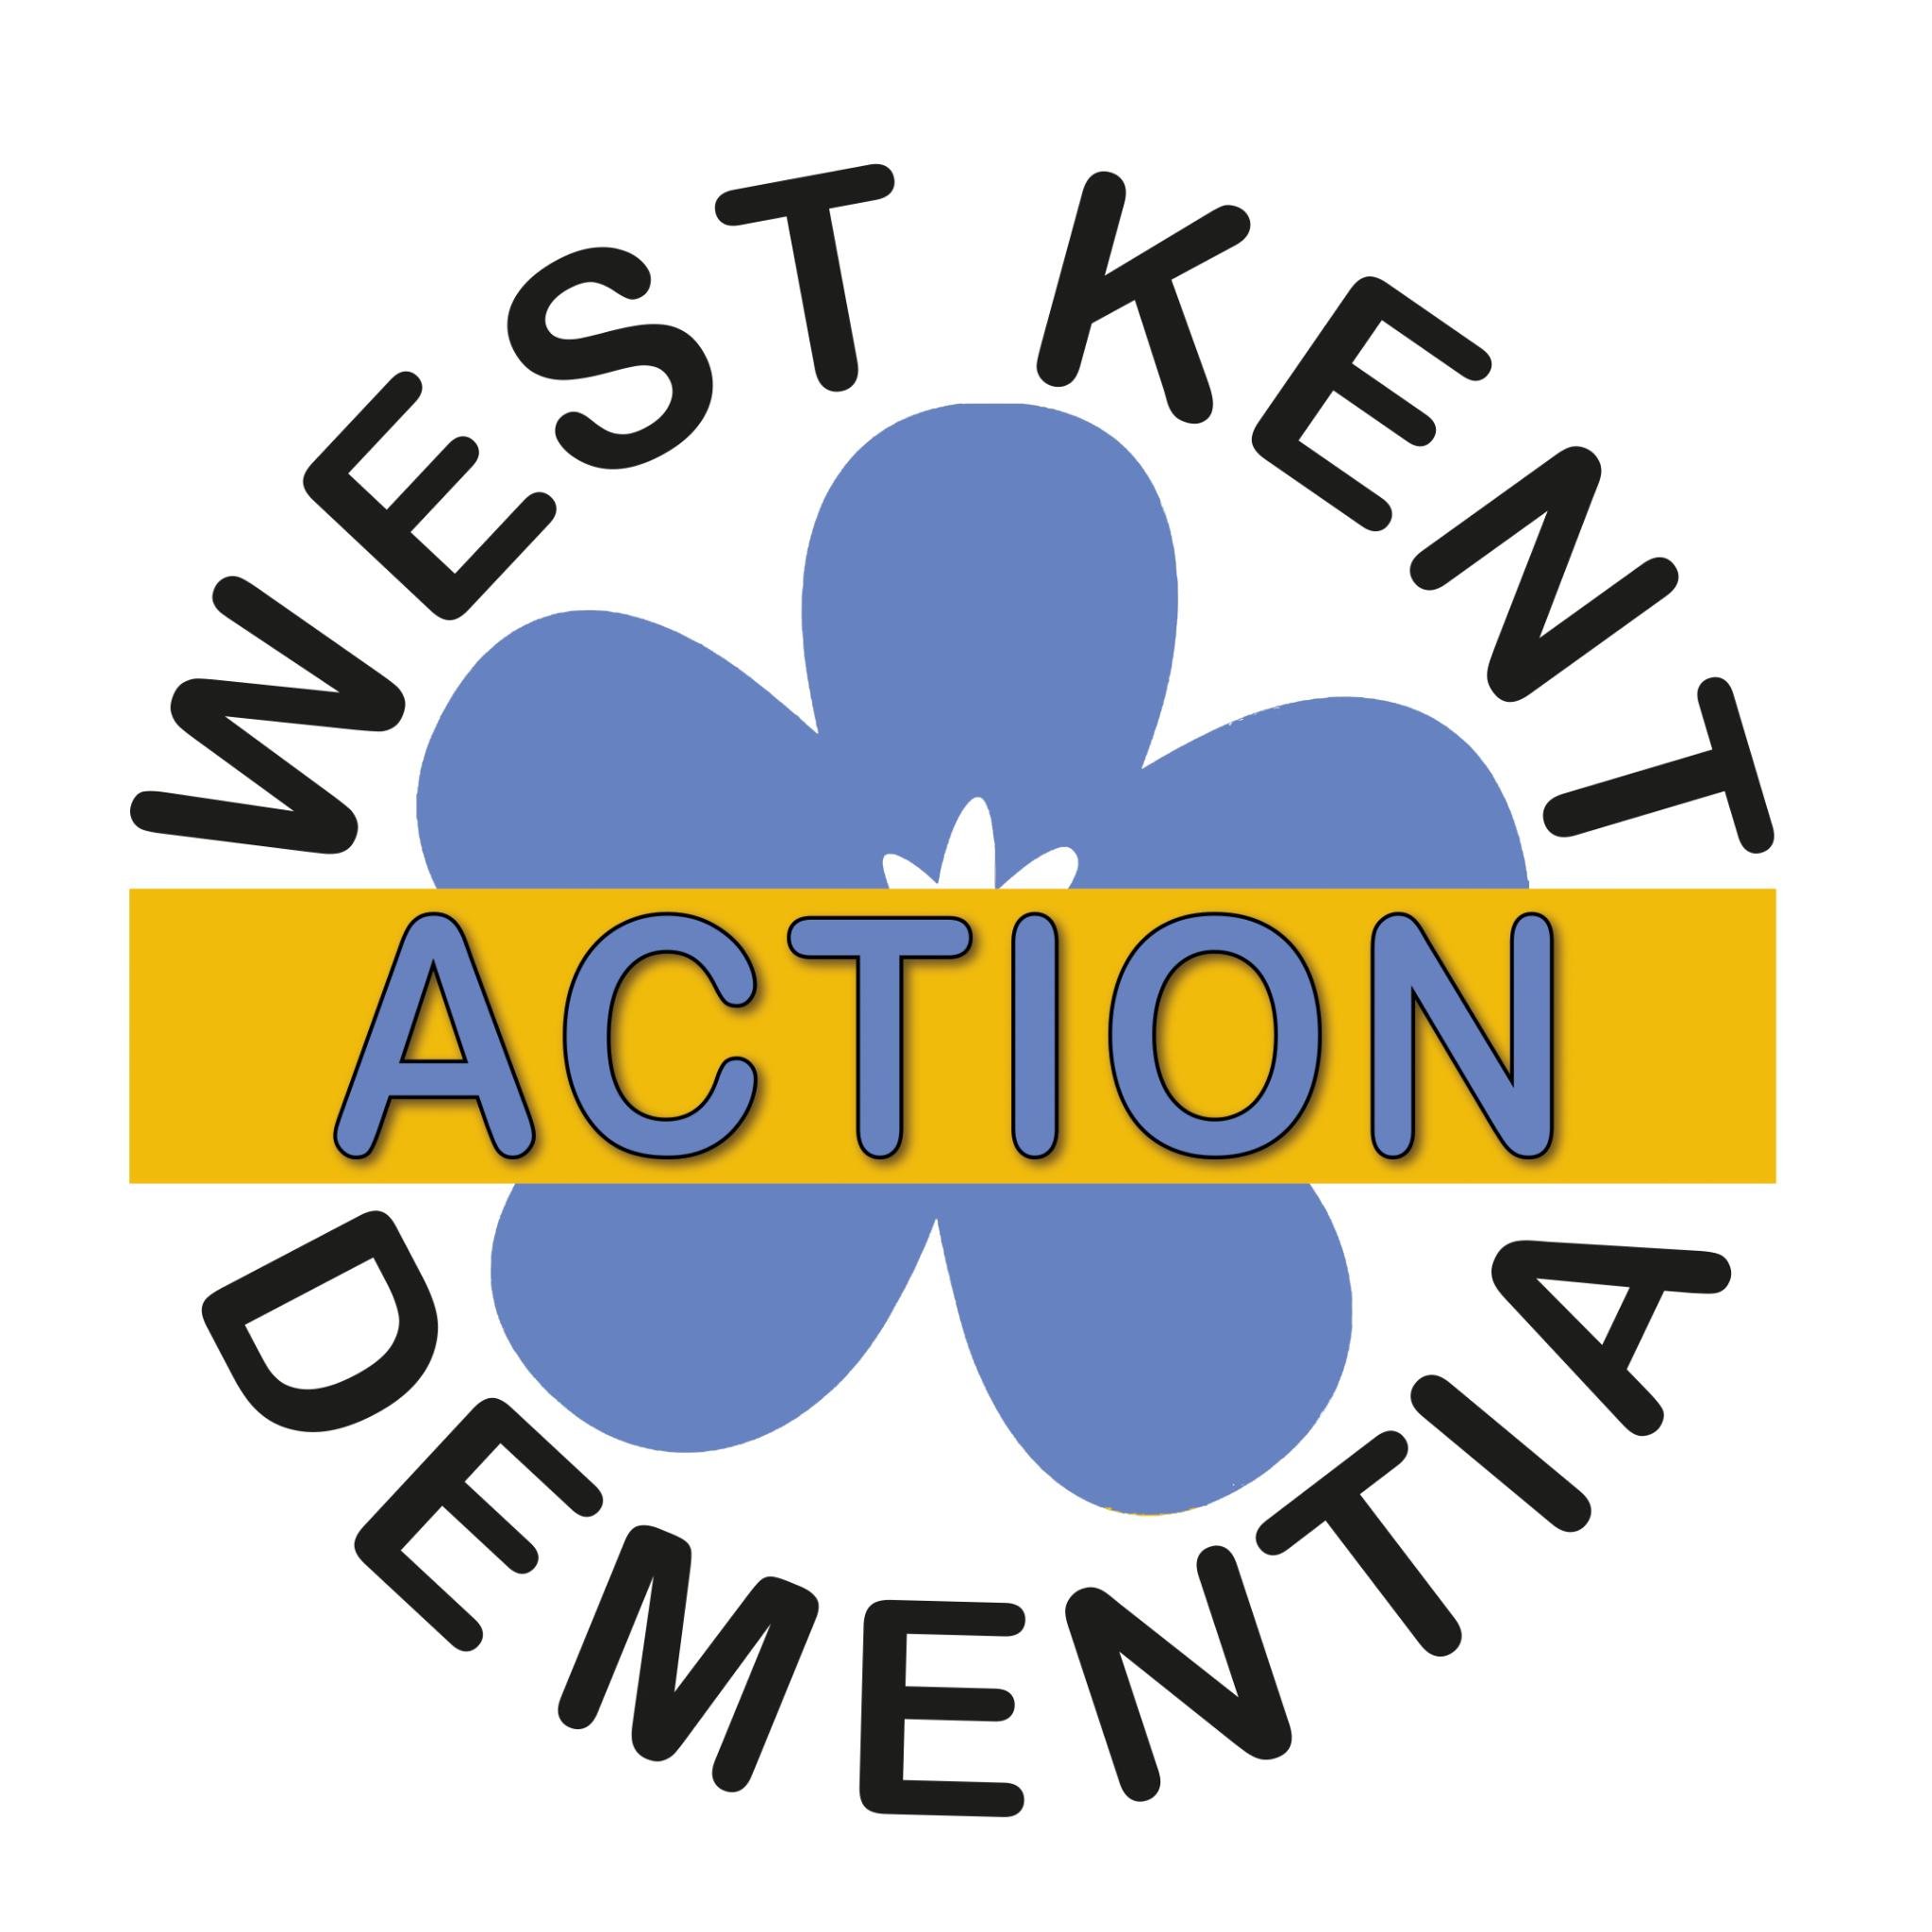 West Kent Dementia Action combines the Dementia Friendly Communities of Tonbridge, Tunbridge Wells, Maidstone and Sevenoaks.